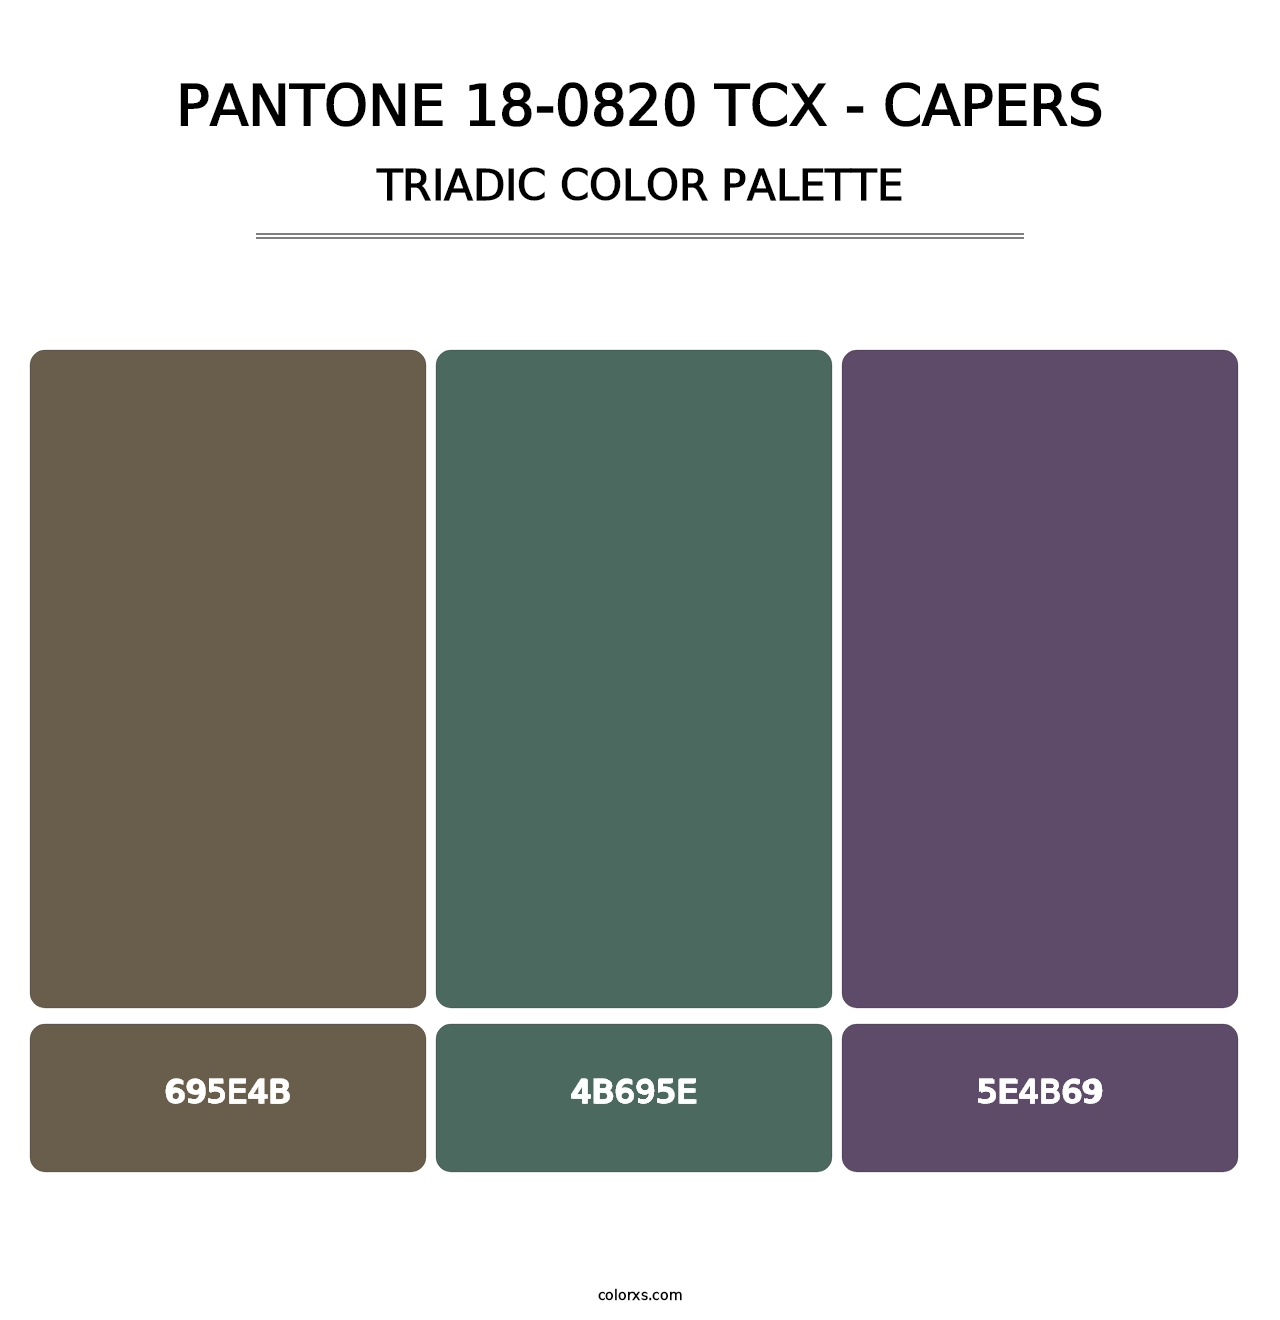 PANTONE 18-0820 TCX - Capers - Triadic Color Palette